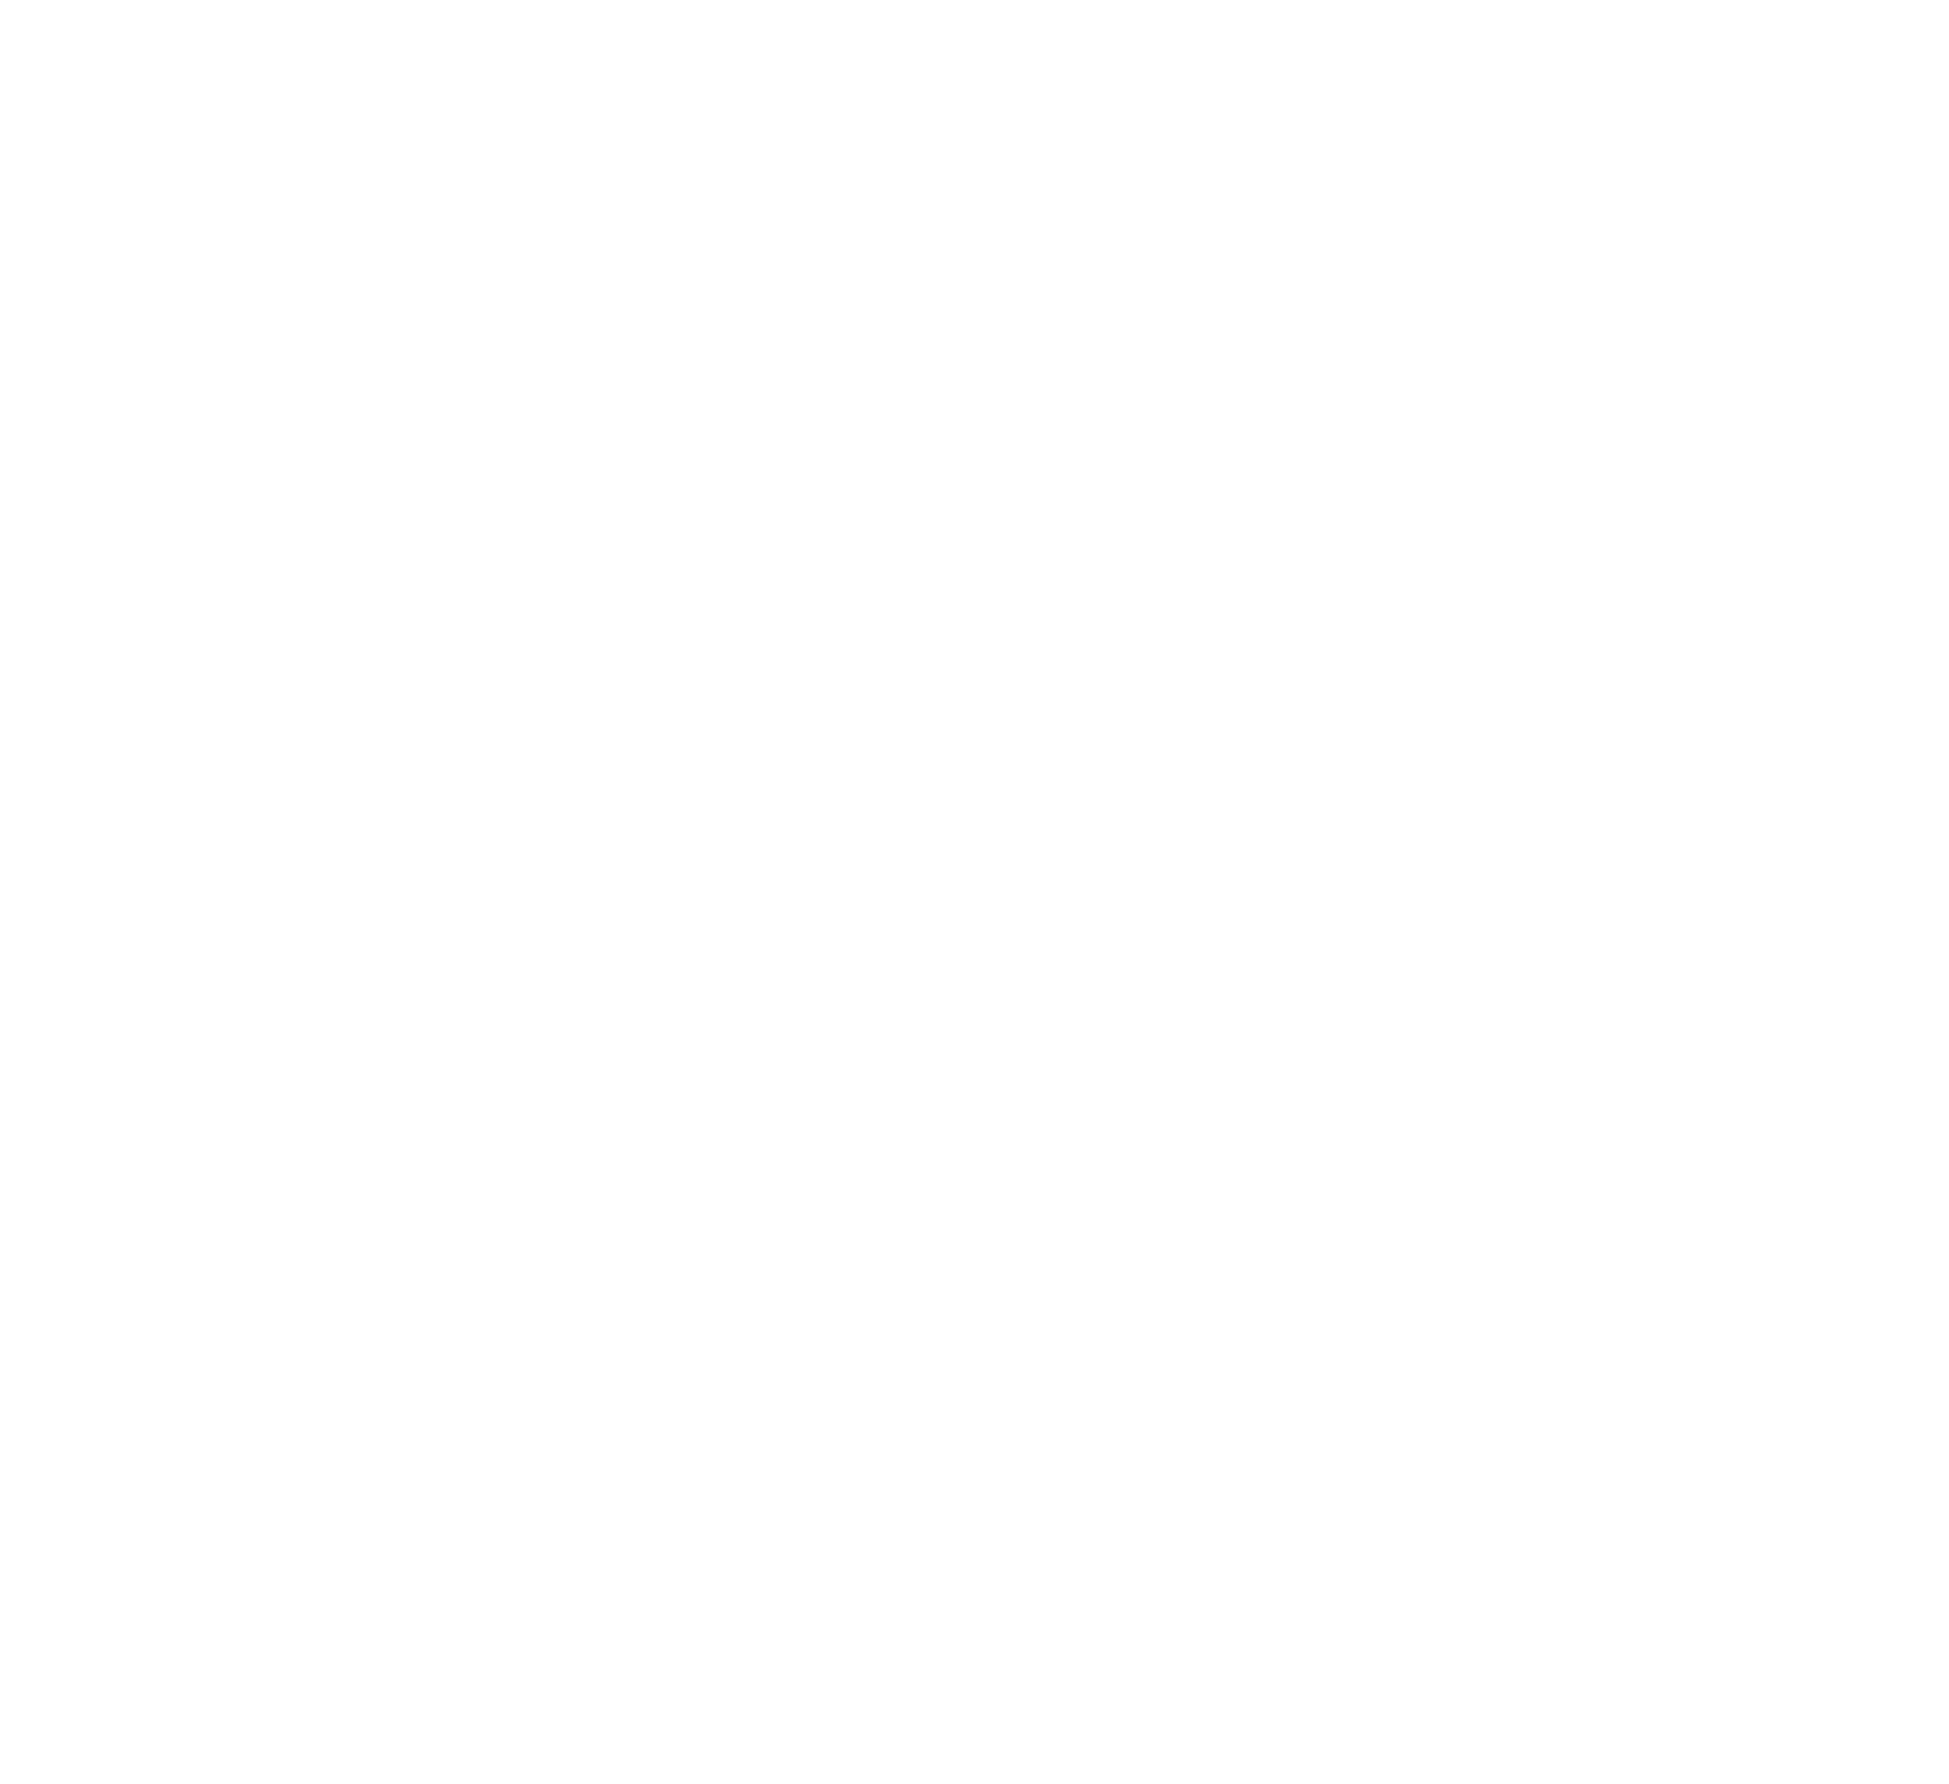 Yukon University 60th Anniversary logo